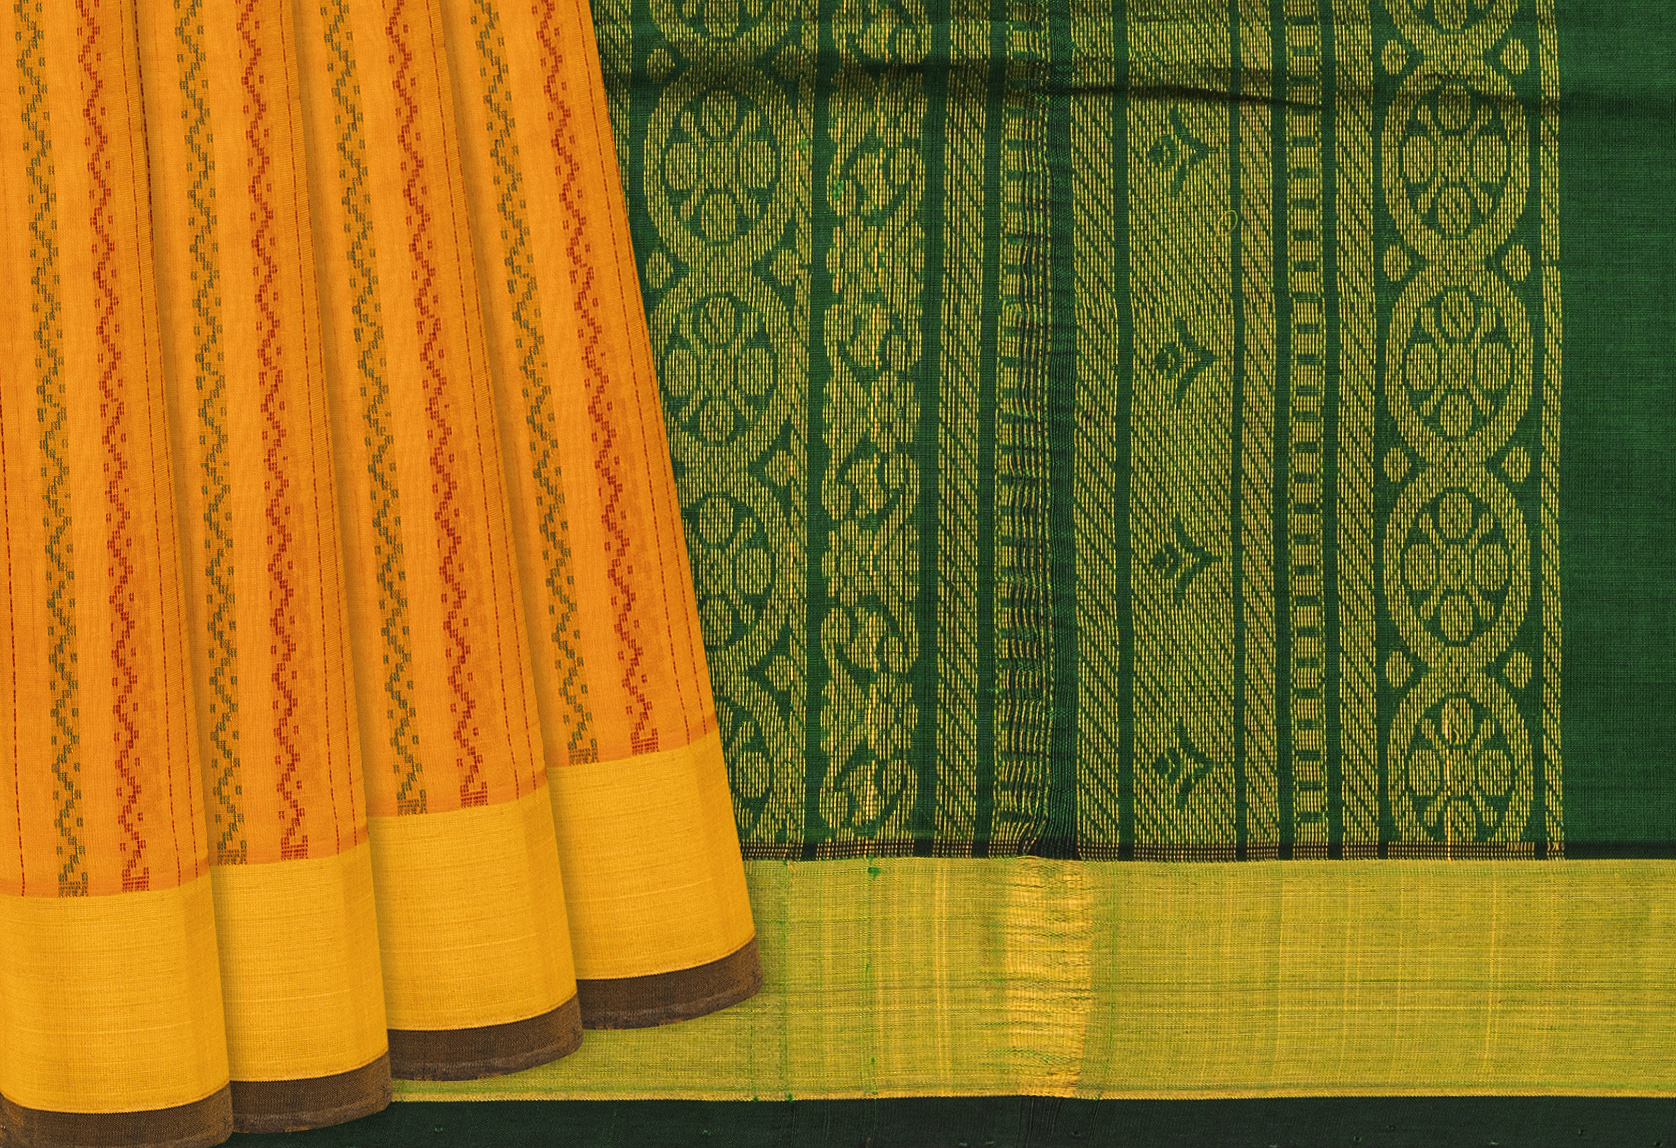 RMKV silk sarees 1100₹ to 1700₹ collections பட்டு சேலை குறைந்த விலையில்  உங்களுக்காக மட்டும் - YouTube